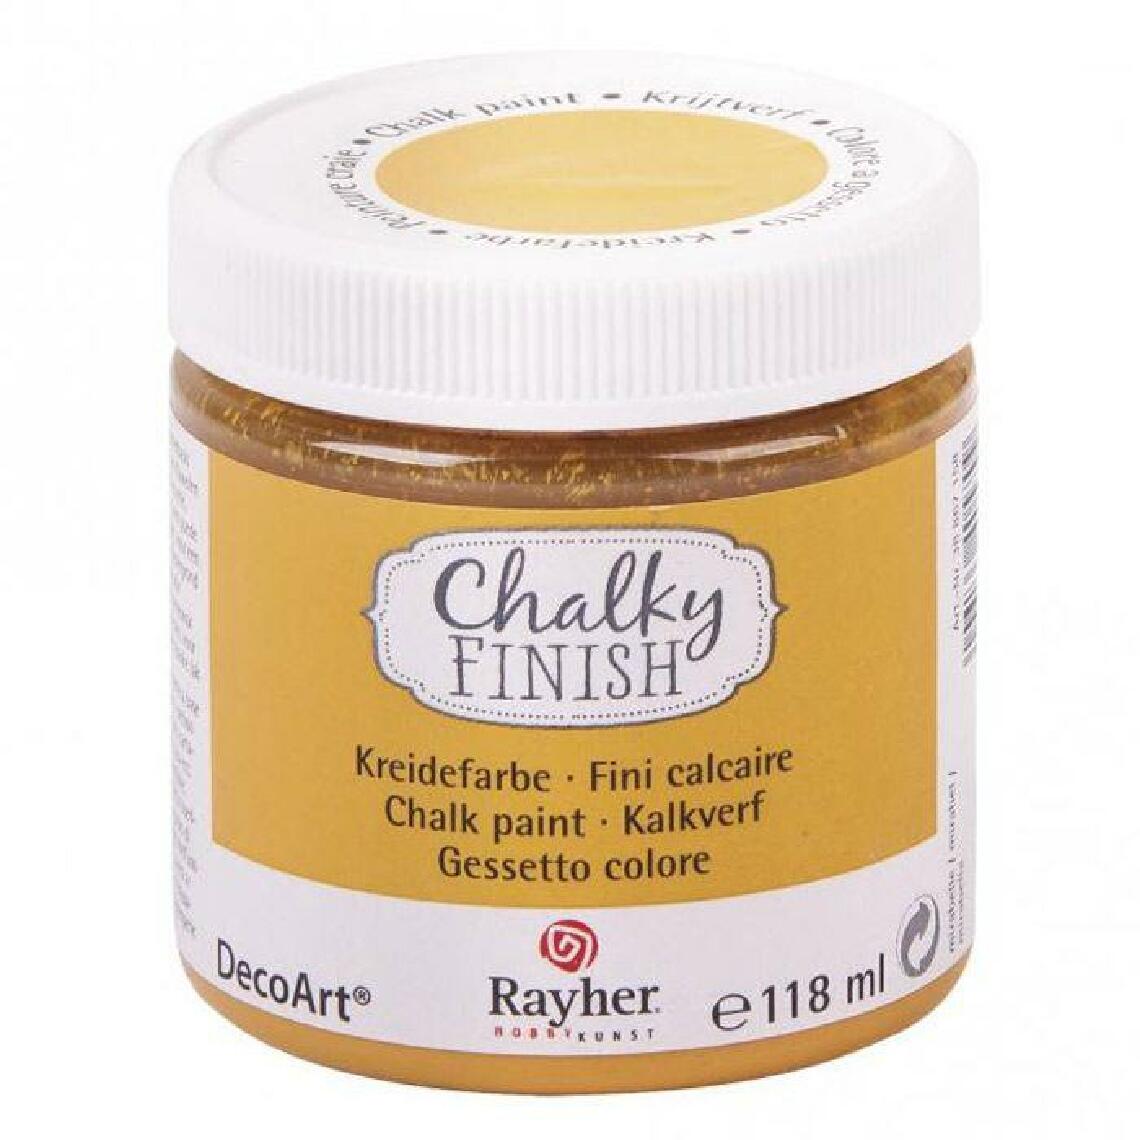 Rayher - Peinture-craie Chalky Finish 118 ml - Orange mirabelle - Ardoises et tableaux